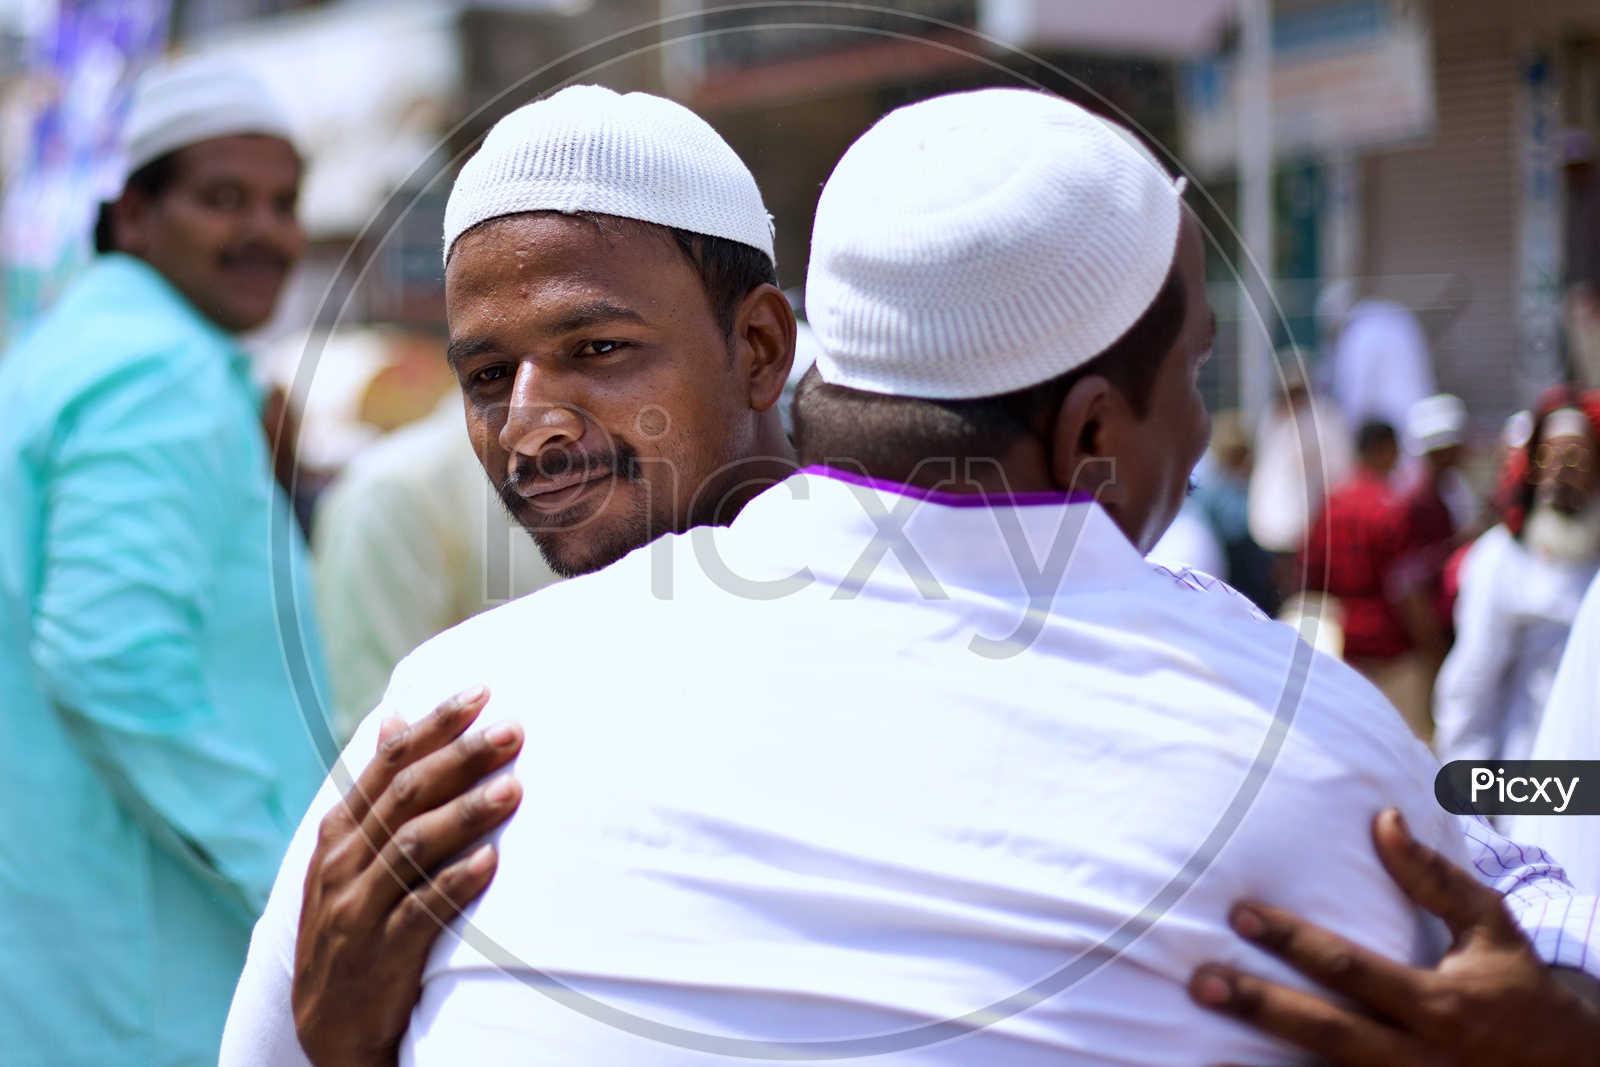 Muslim doing hug on the occasion of EID.